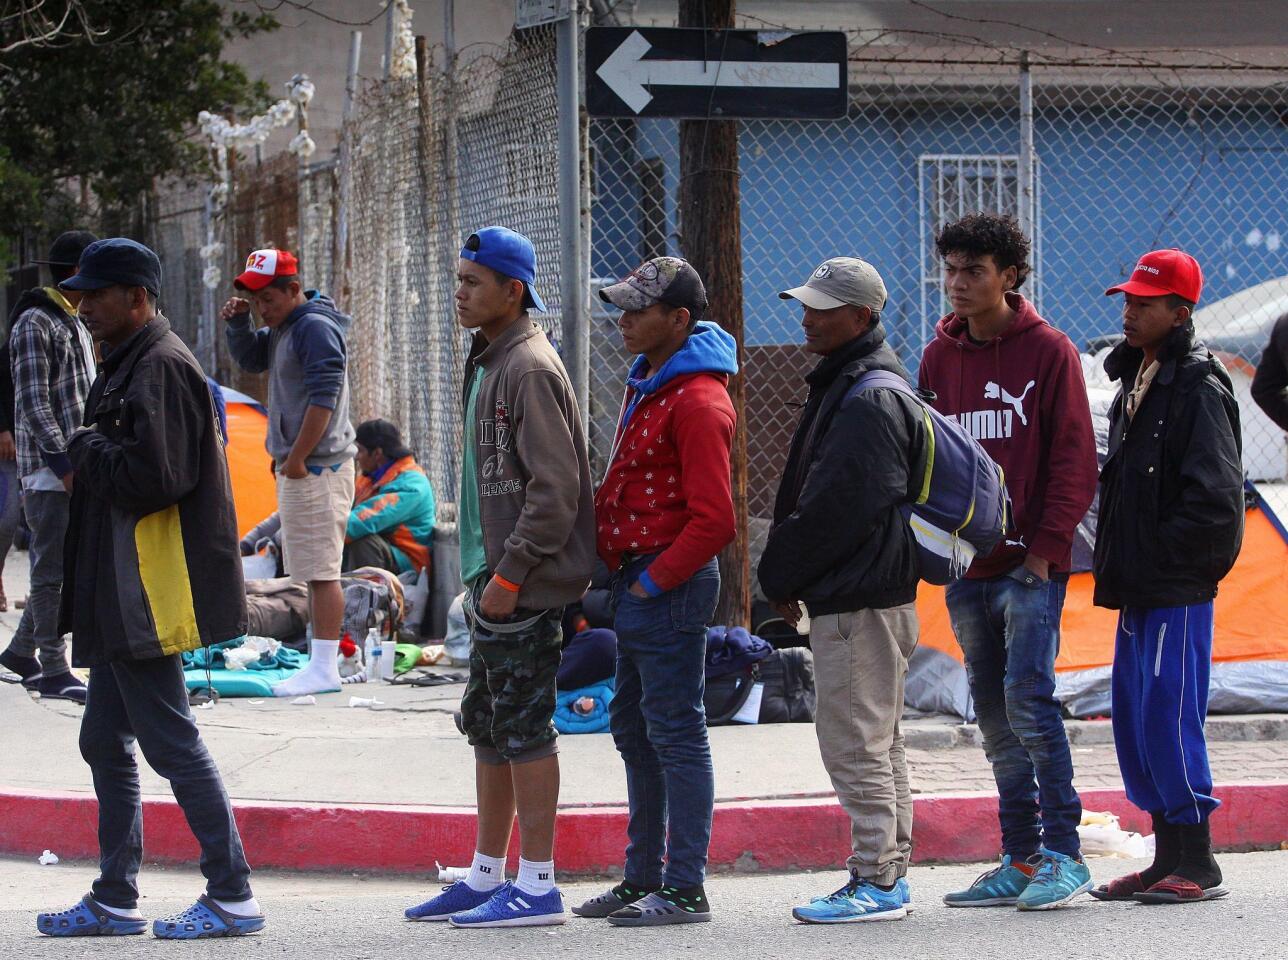 Alcalde de Tijuana declaró "cero tolerancia" para migrantes que violen la ley